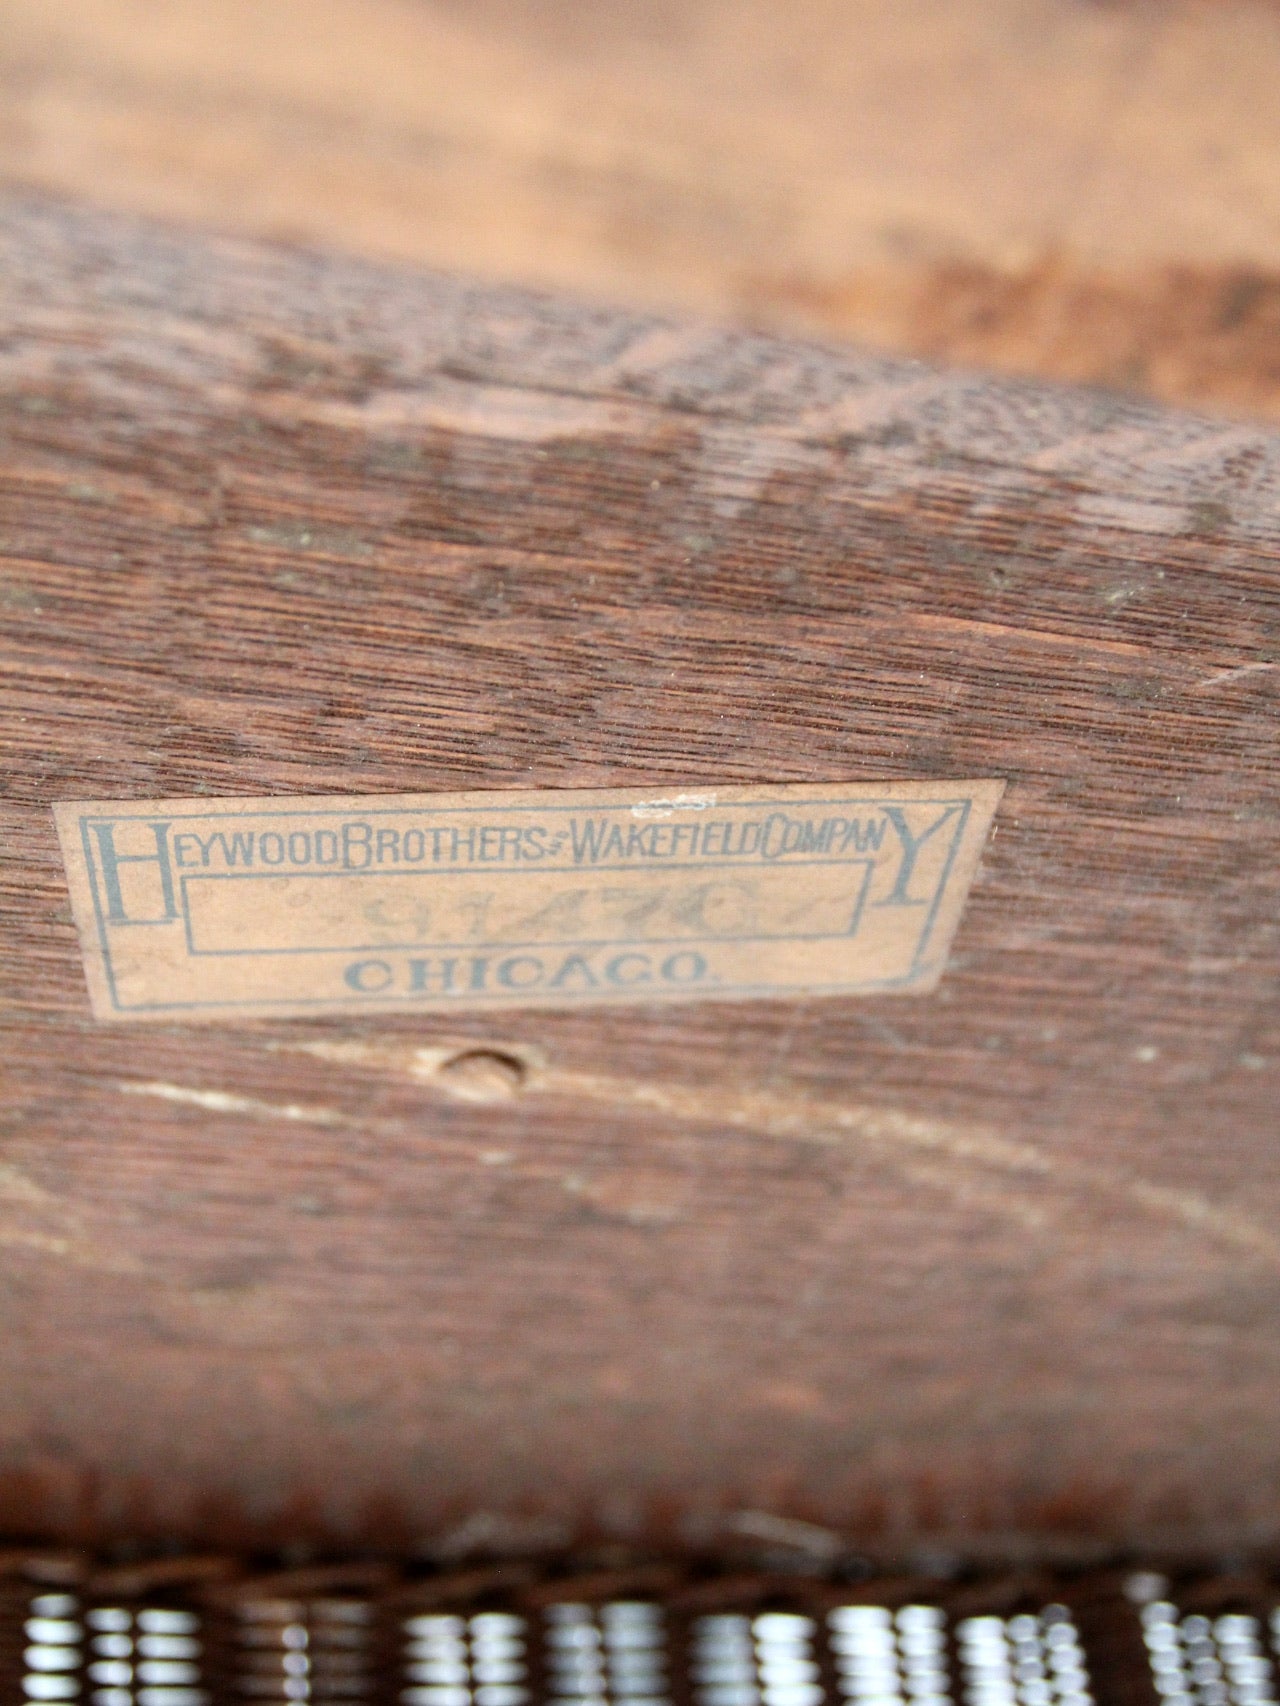 antique Heywood Wakefield wicker table